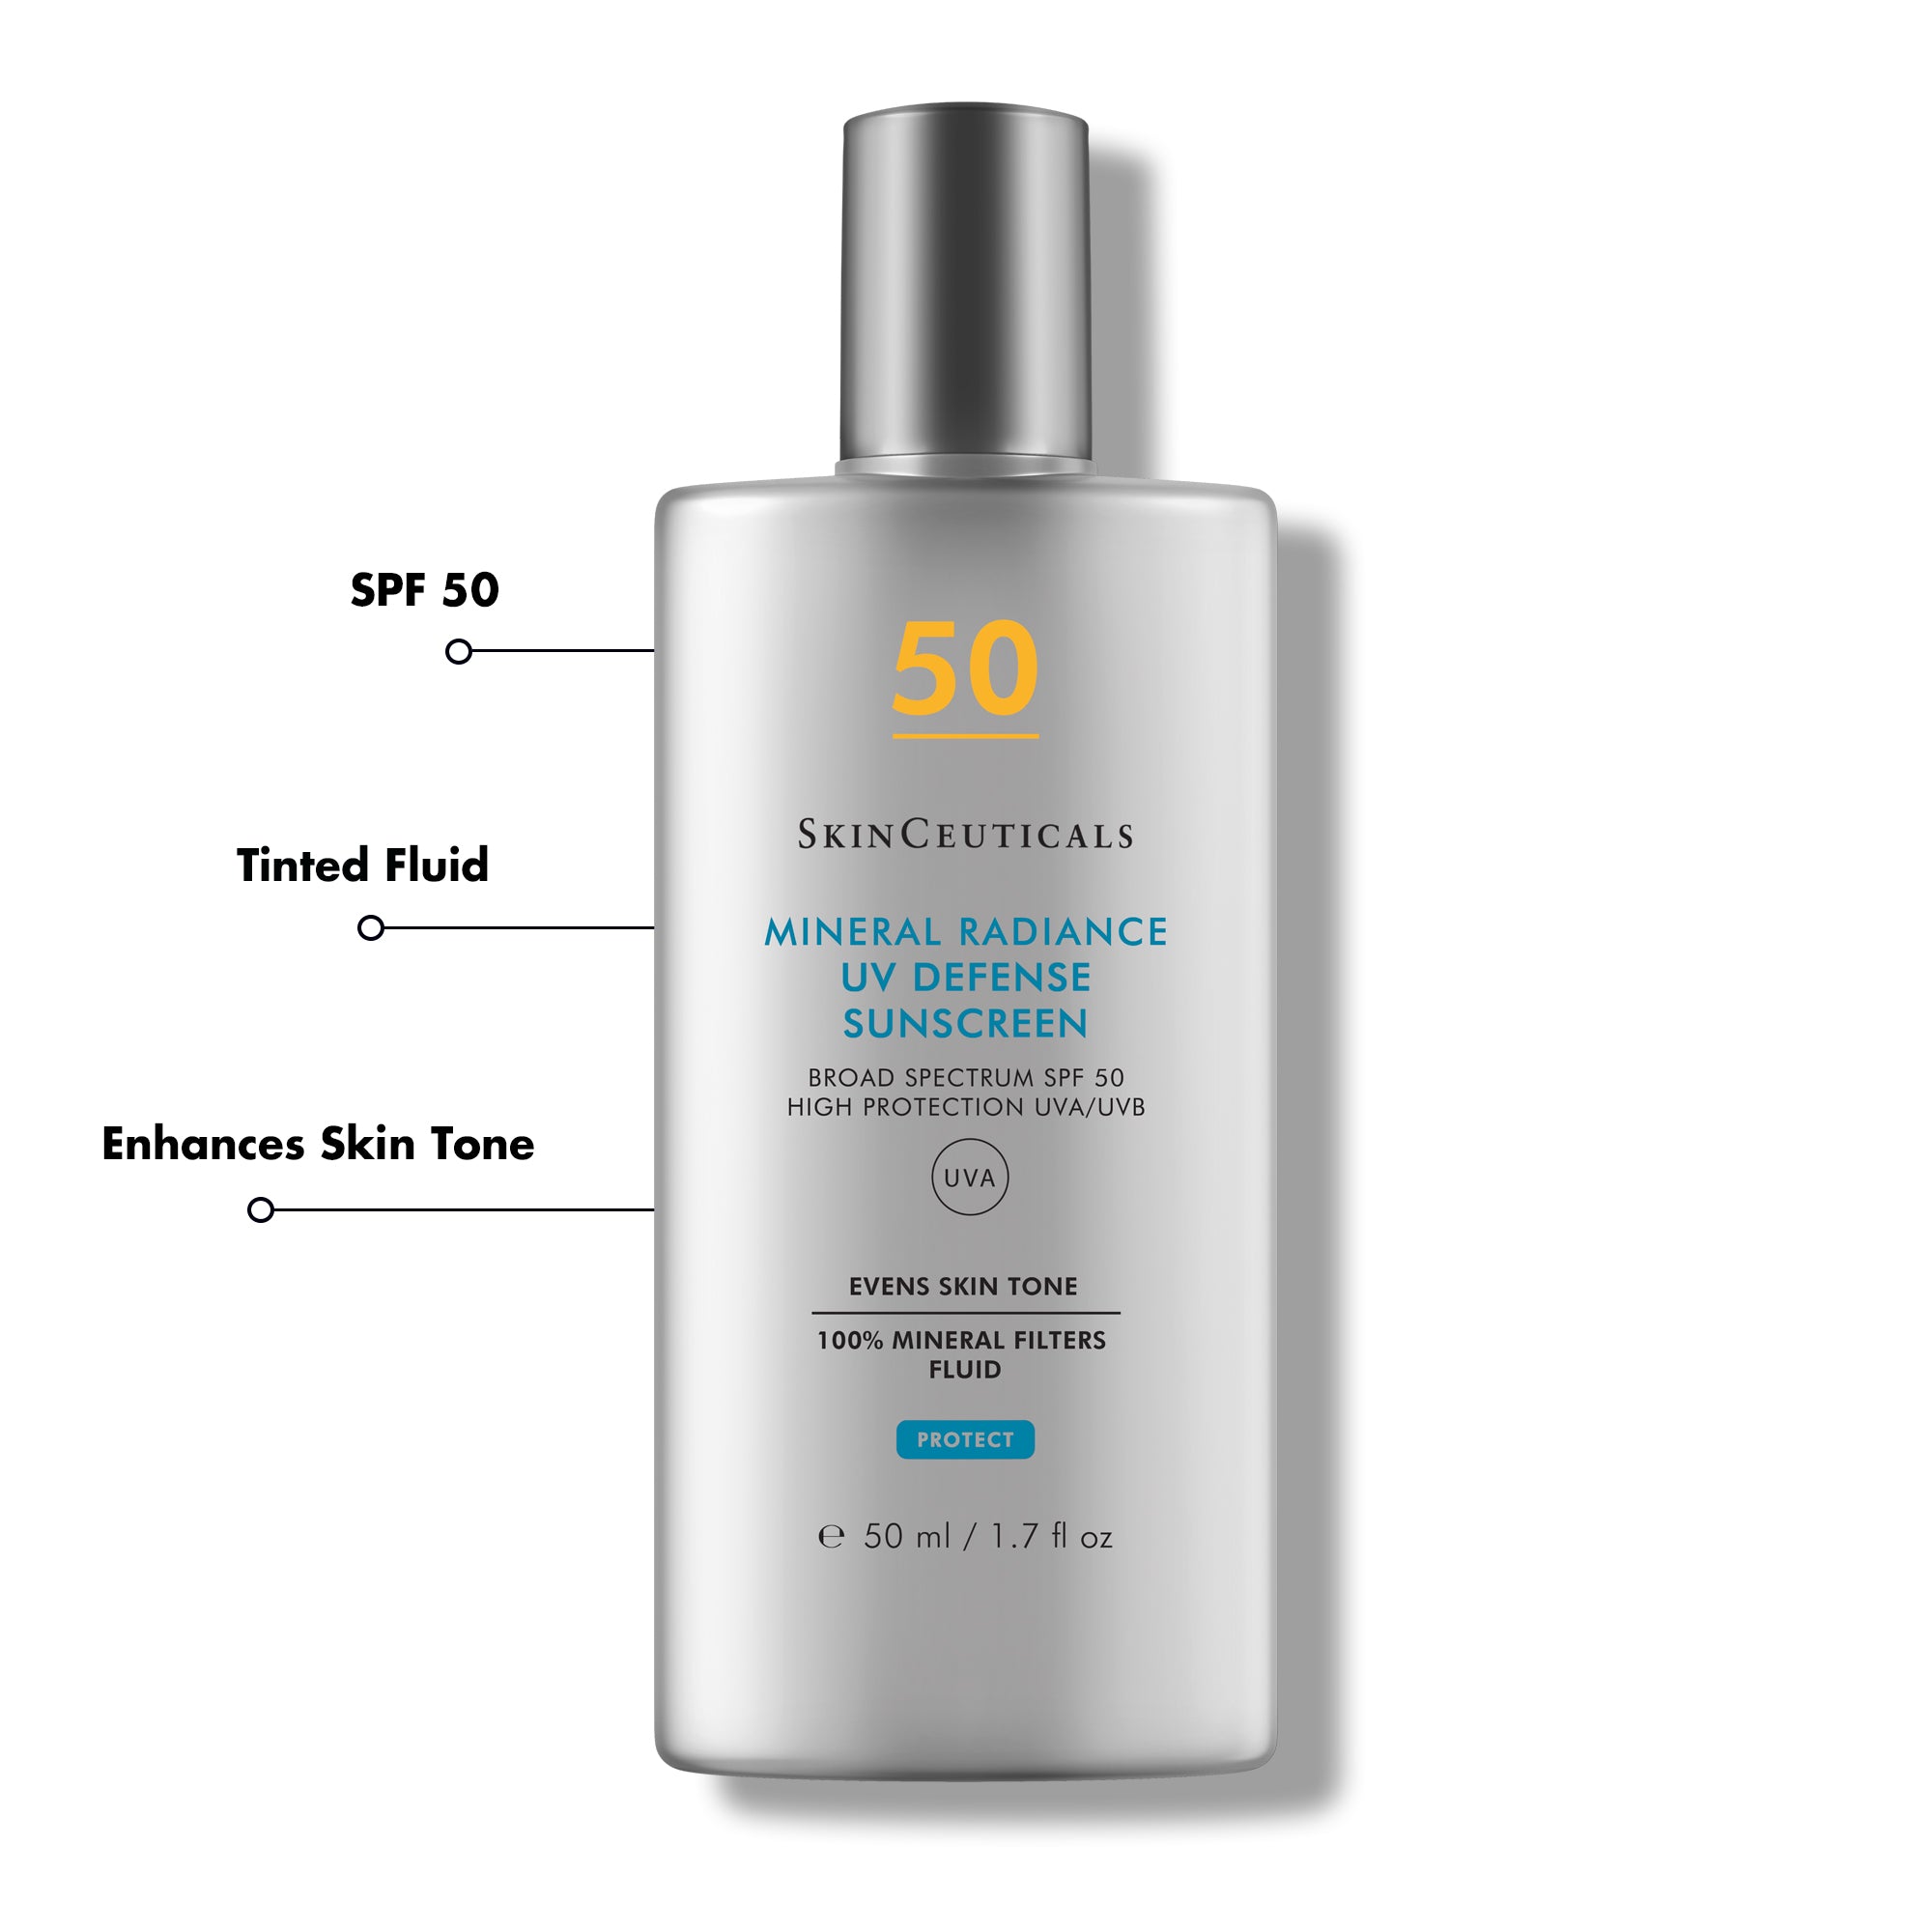 SkinCeuticals - Mineral Radiance UV Defense SPF 50 (50mls)